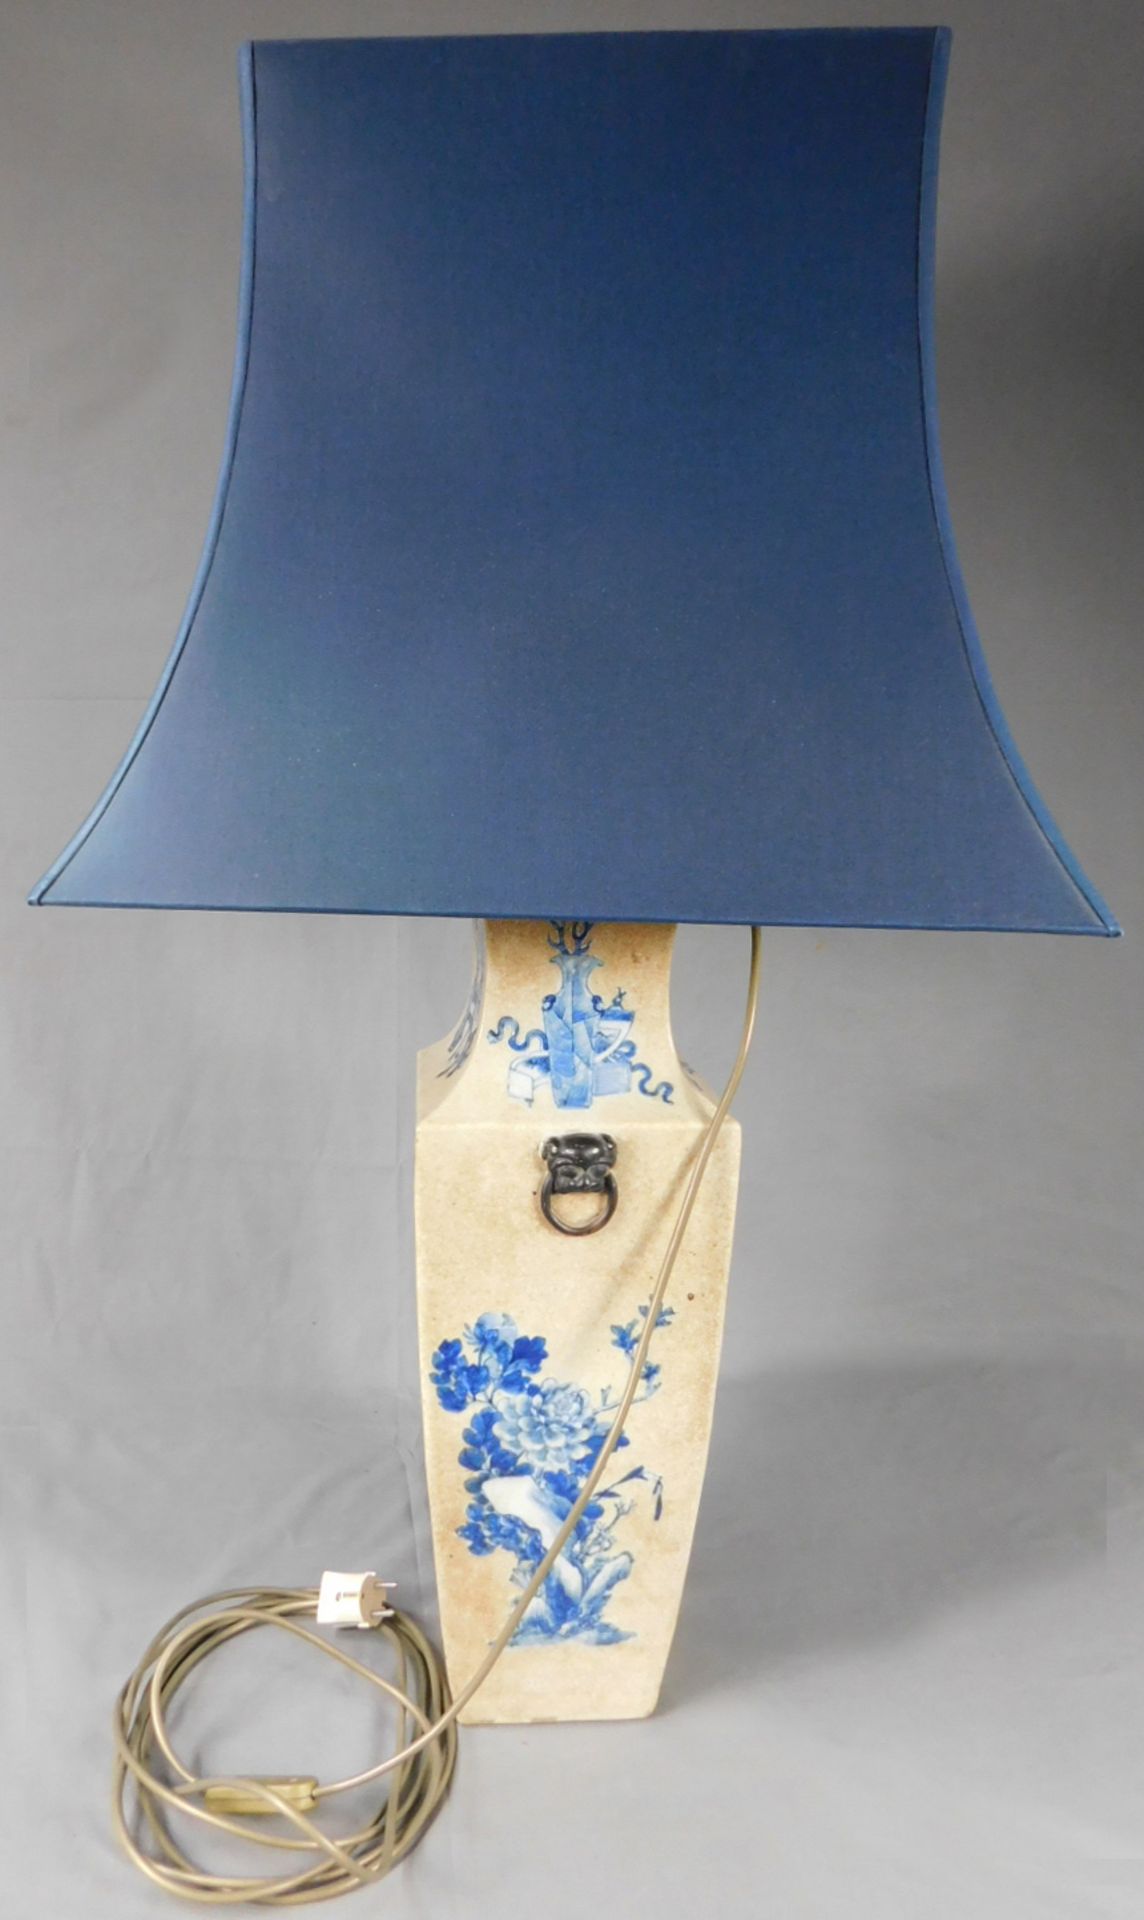 China Lampe. - Image 14 of 34